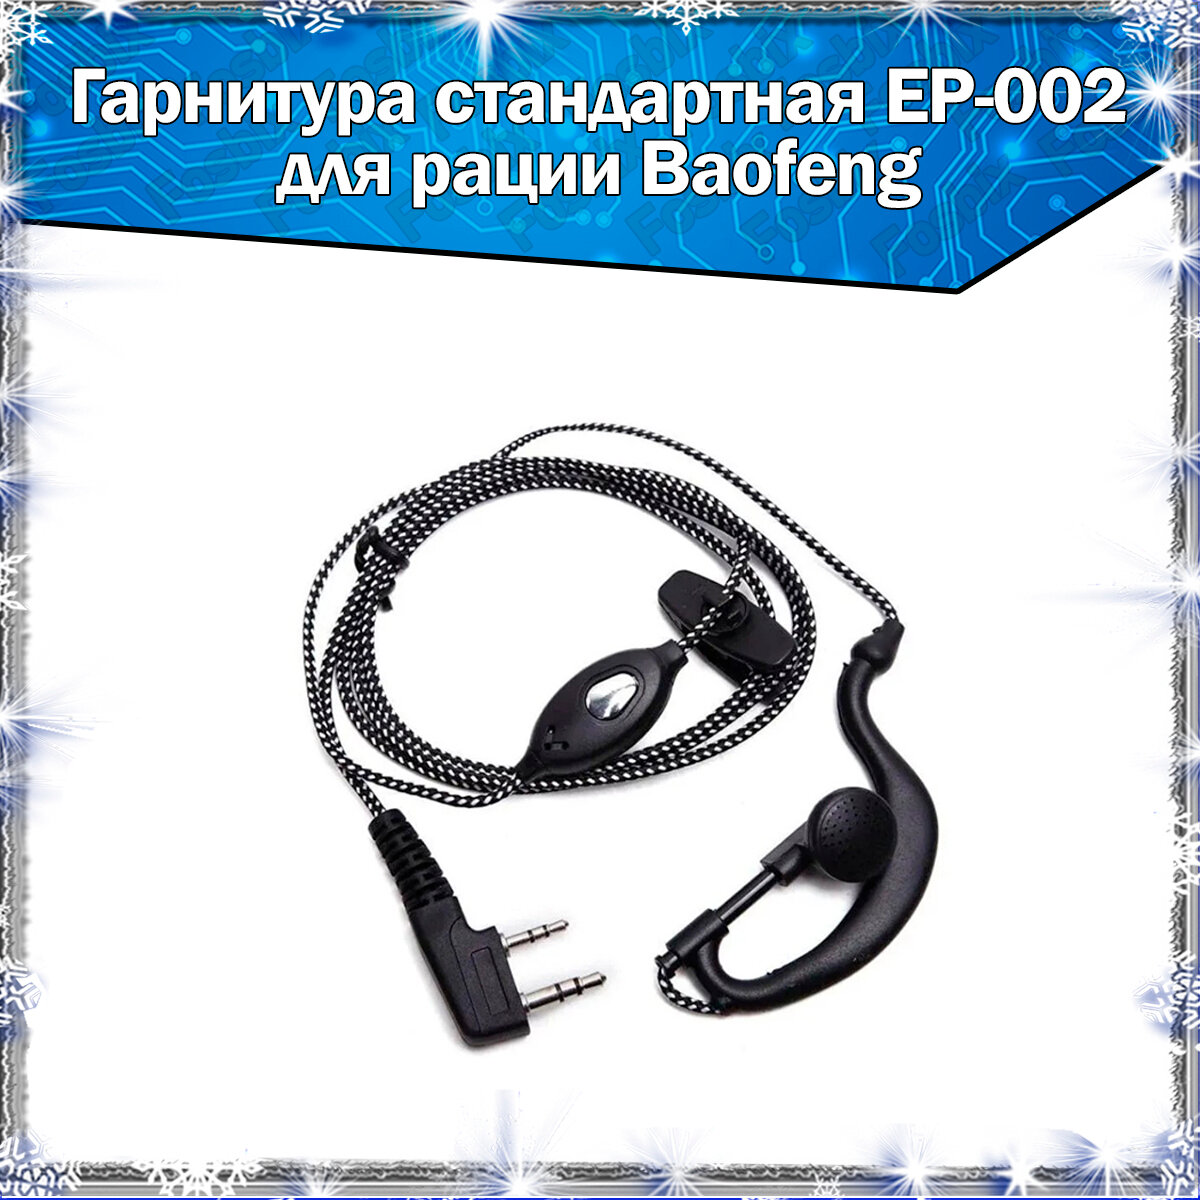 Гарнитура для Baofeng UV-5R EP-002